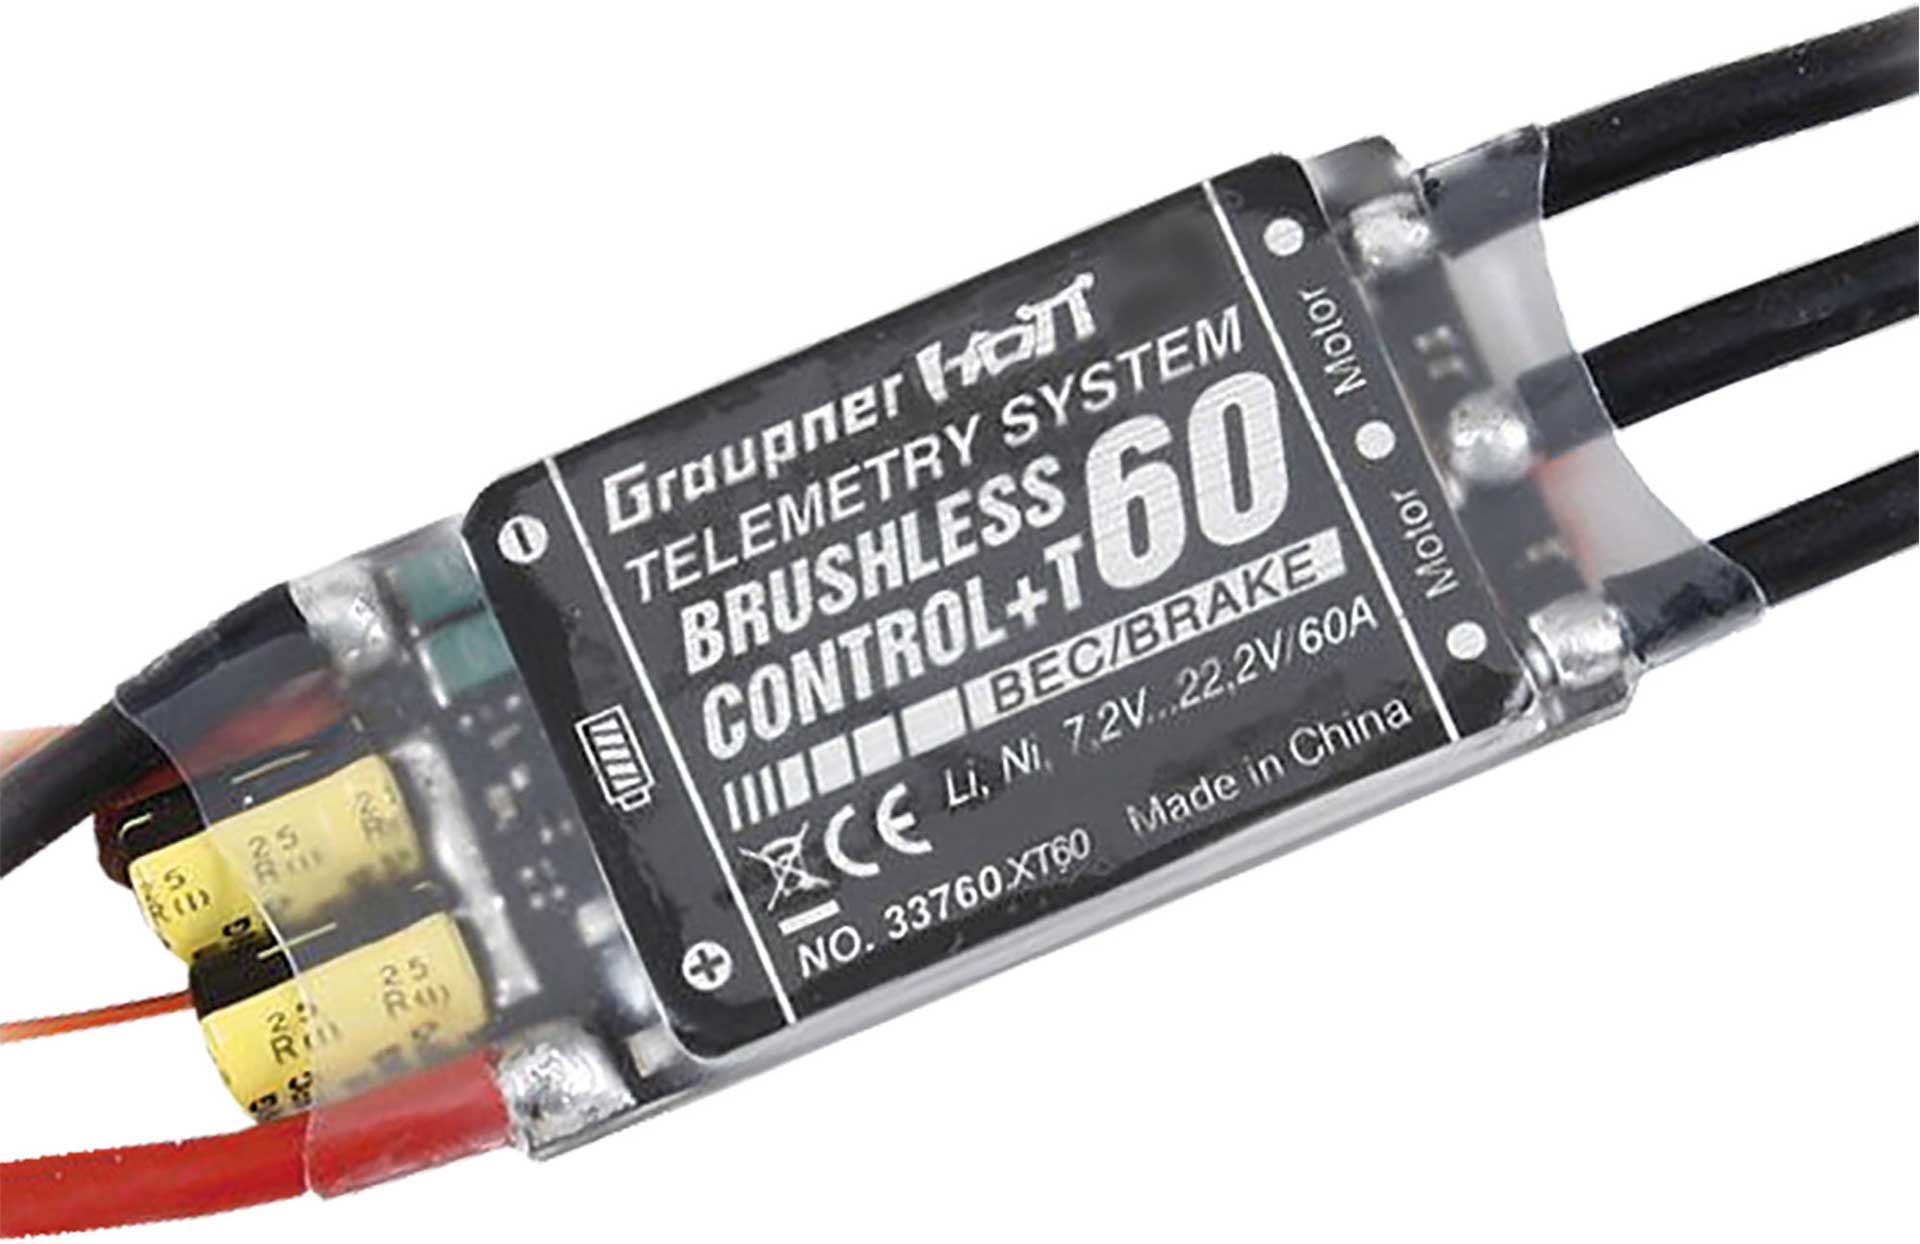 GRAUPNER BRUSHLESS CONTROL+ T 60 BEC G2 XT-60 RPM CONTROLLER WITH HOTT TELEMETRY